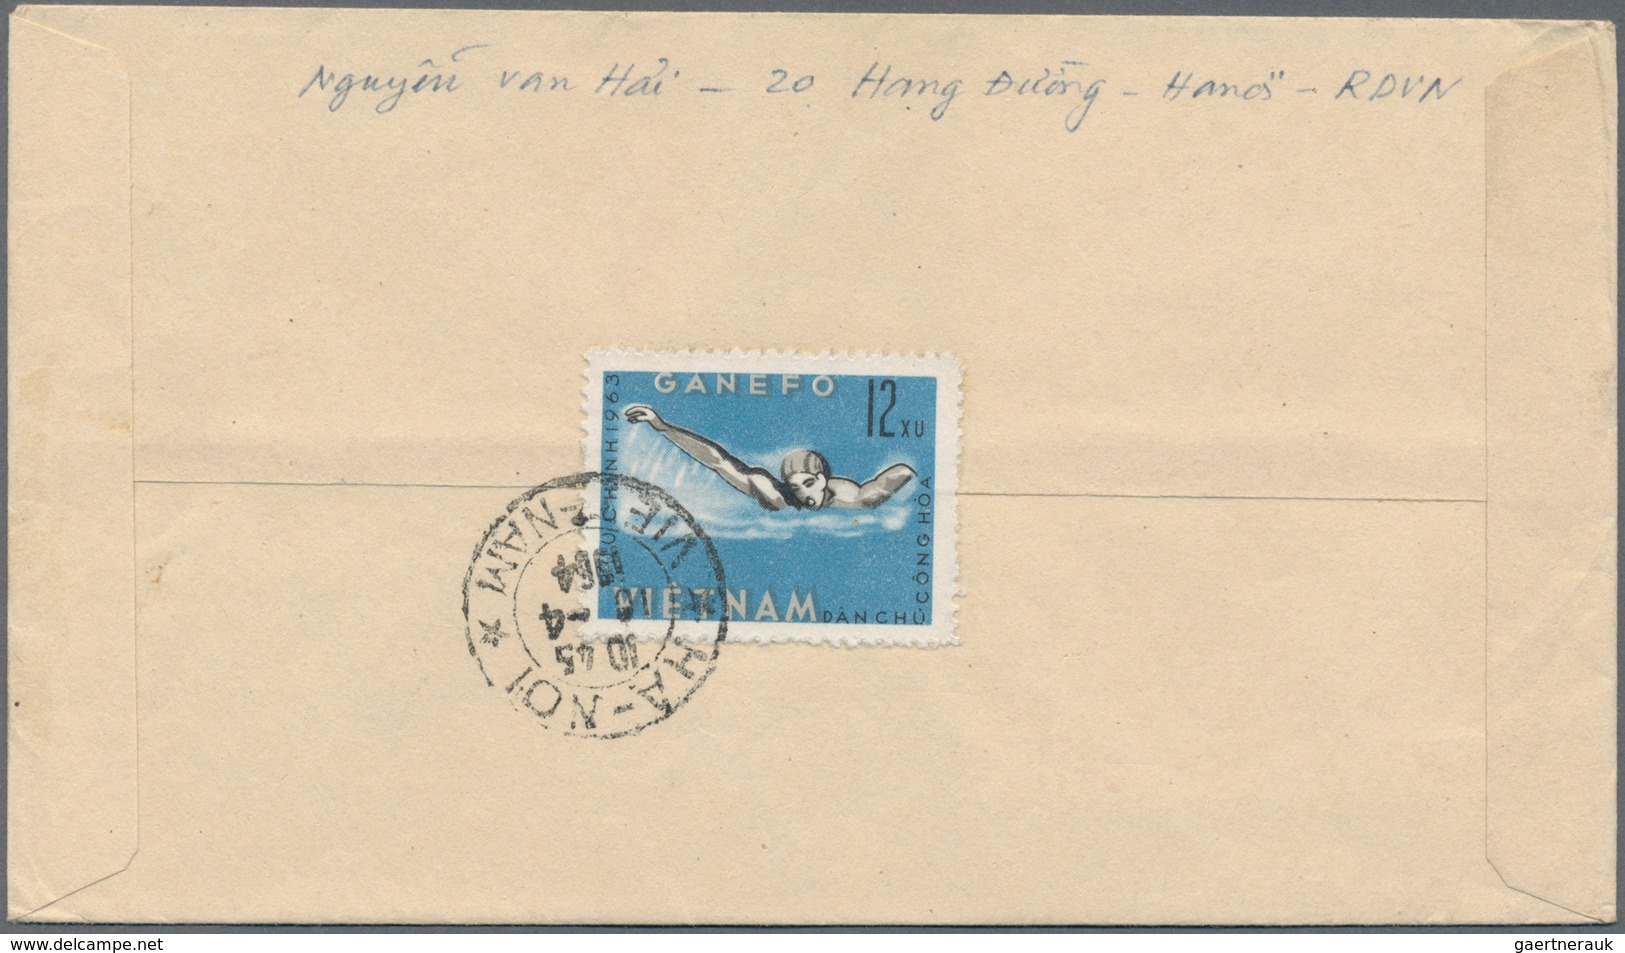 Vietnam-Nord (1945-1975): 1957/63, Cover Addressed To Jena-Saale, East Germany, Bearing 67th Birthda - Vietnam